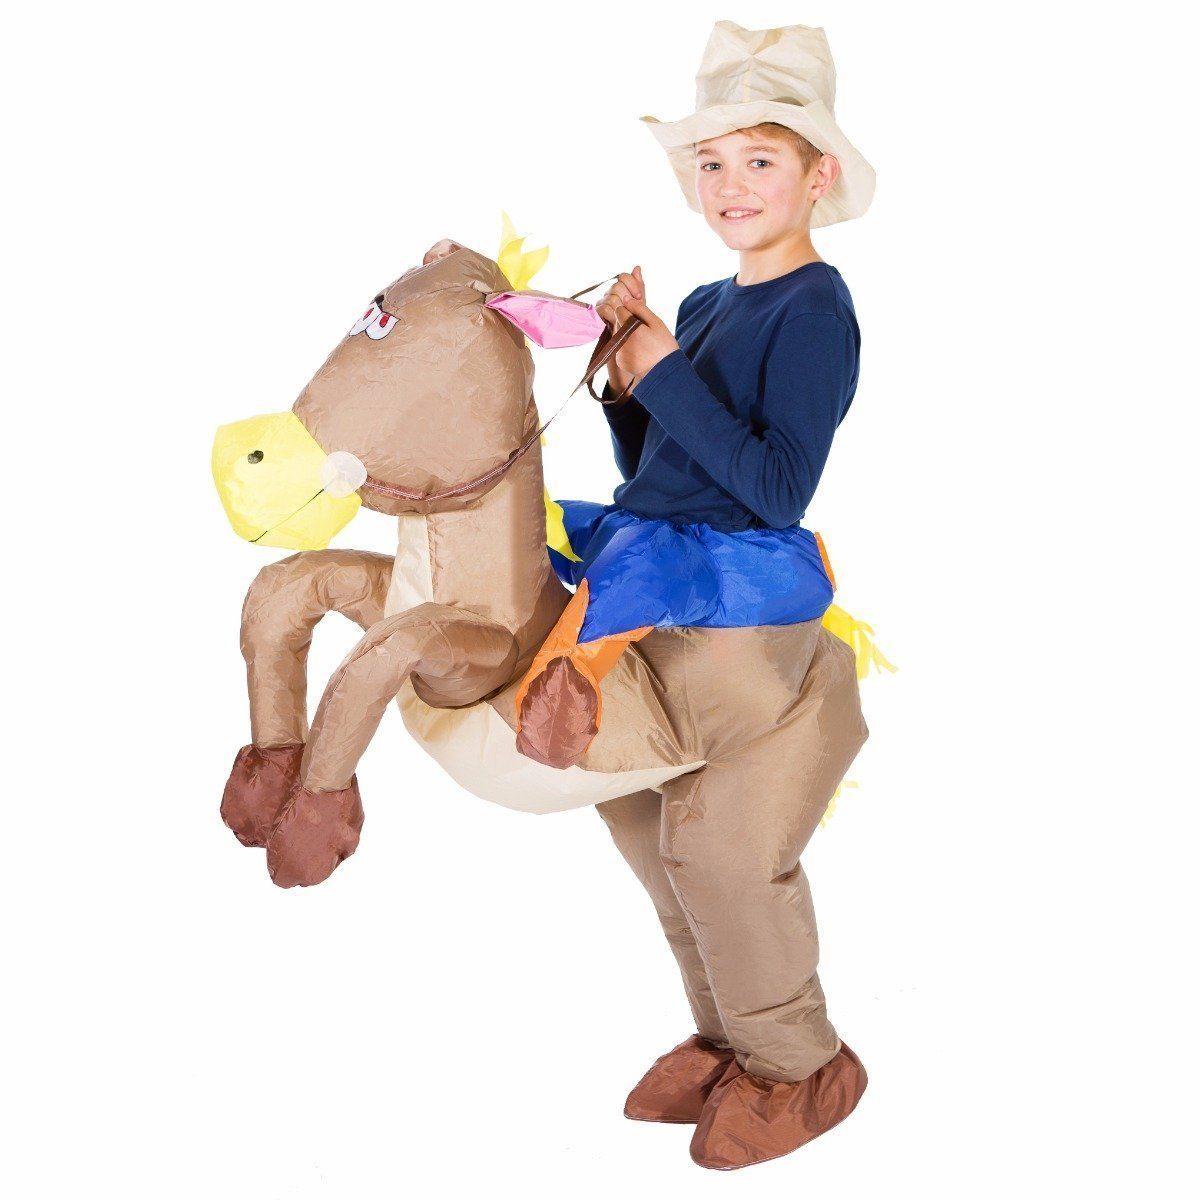 Fancy Dress - Kids Inflatable Cowboy Costume